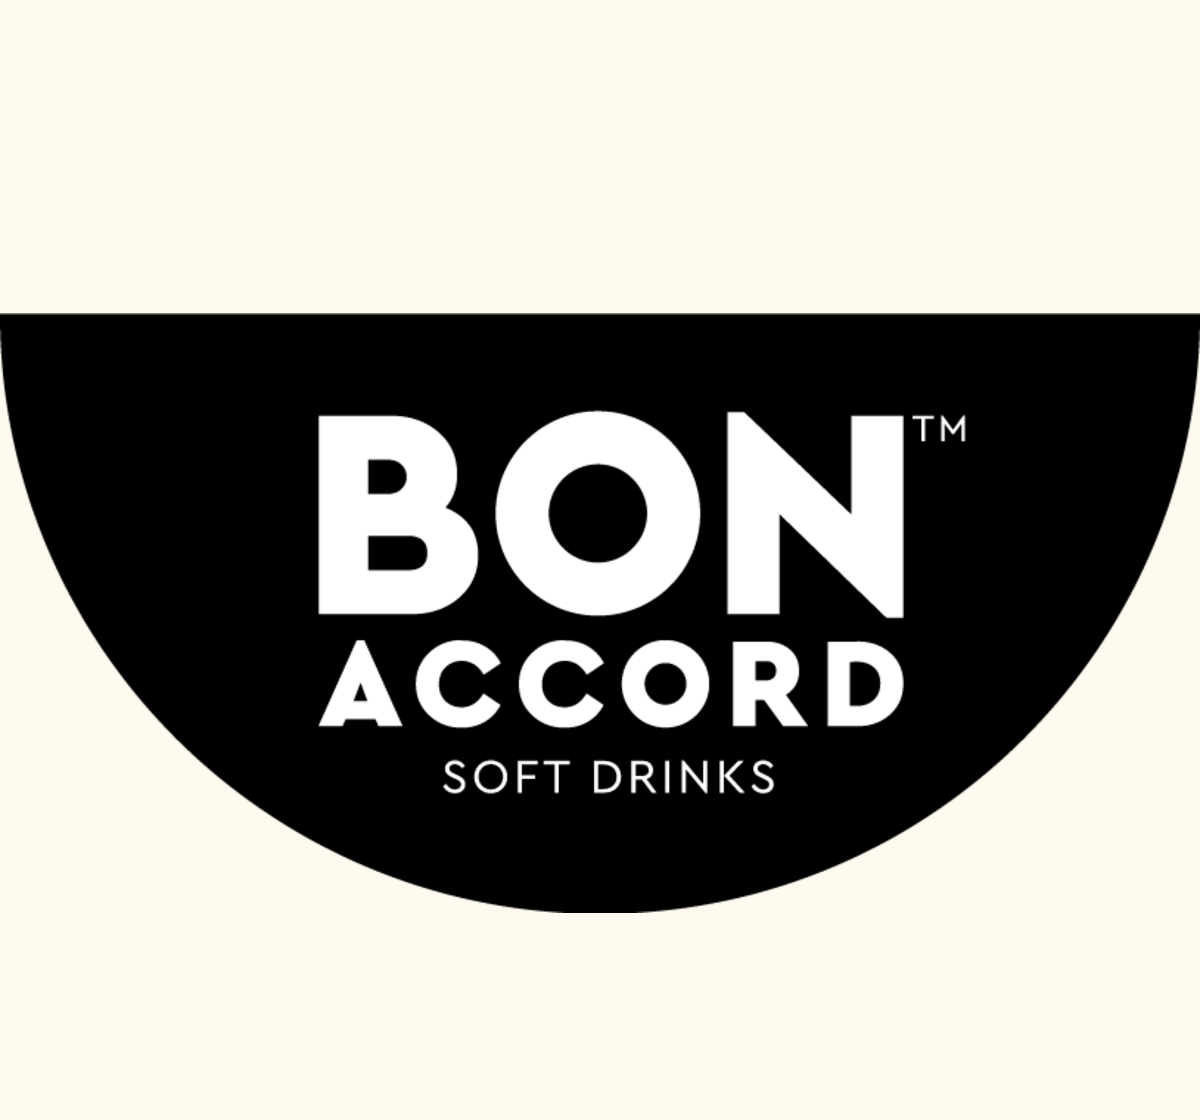 Bon Accord brand logo